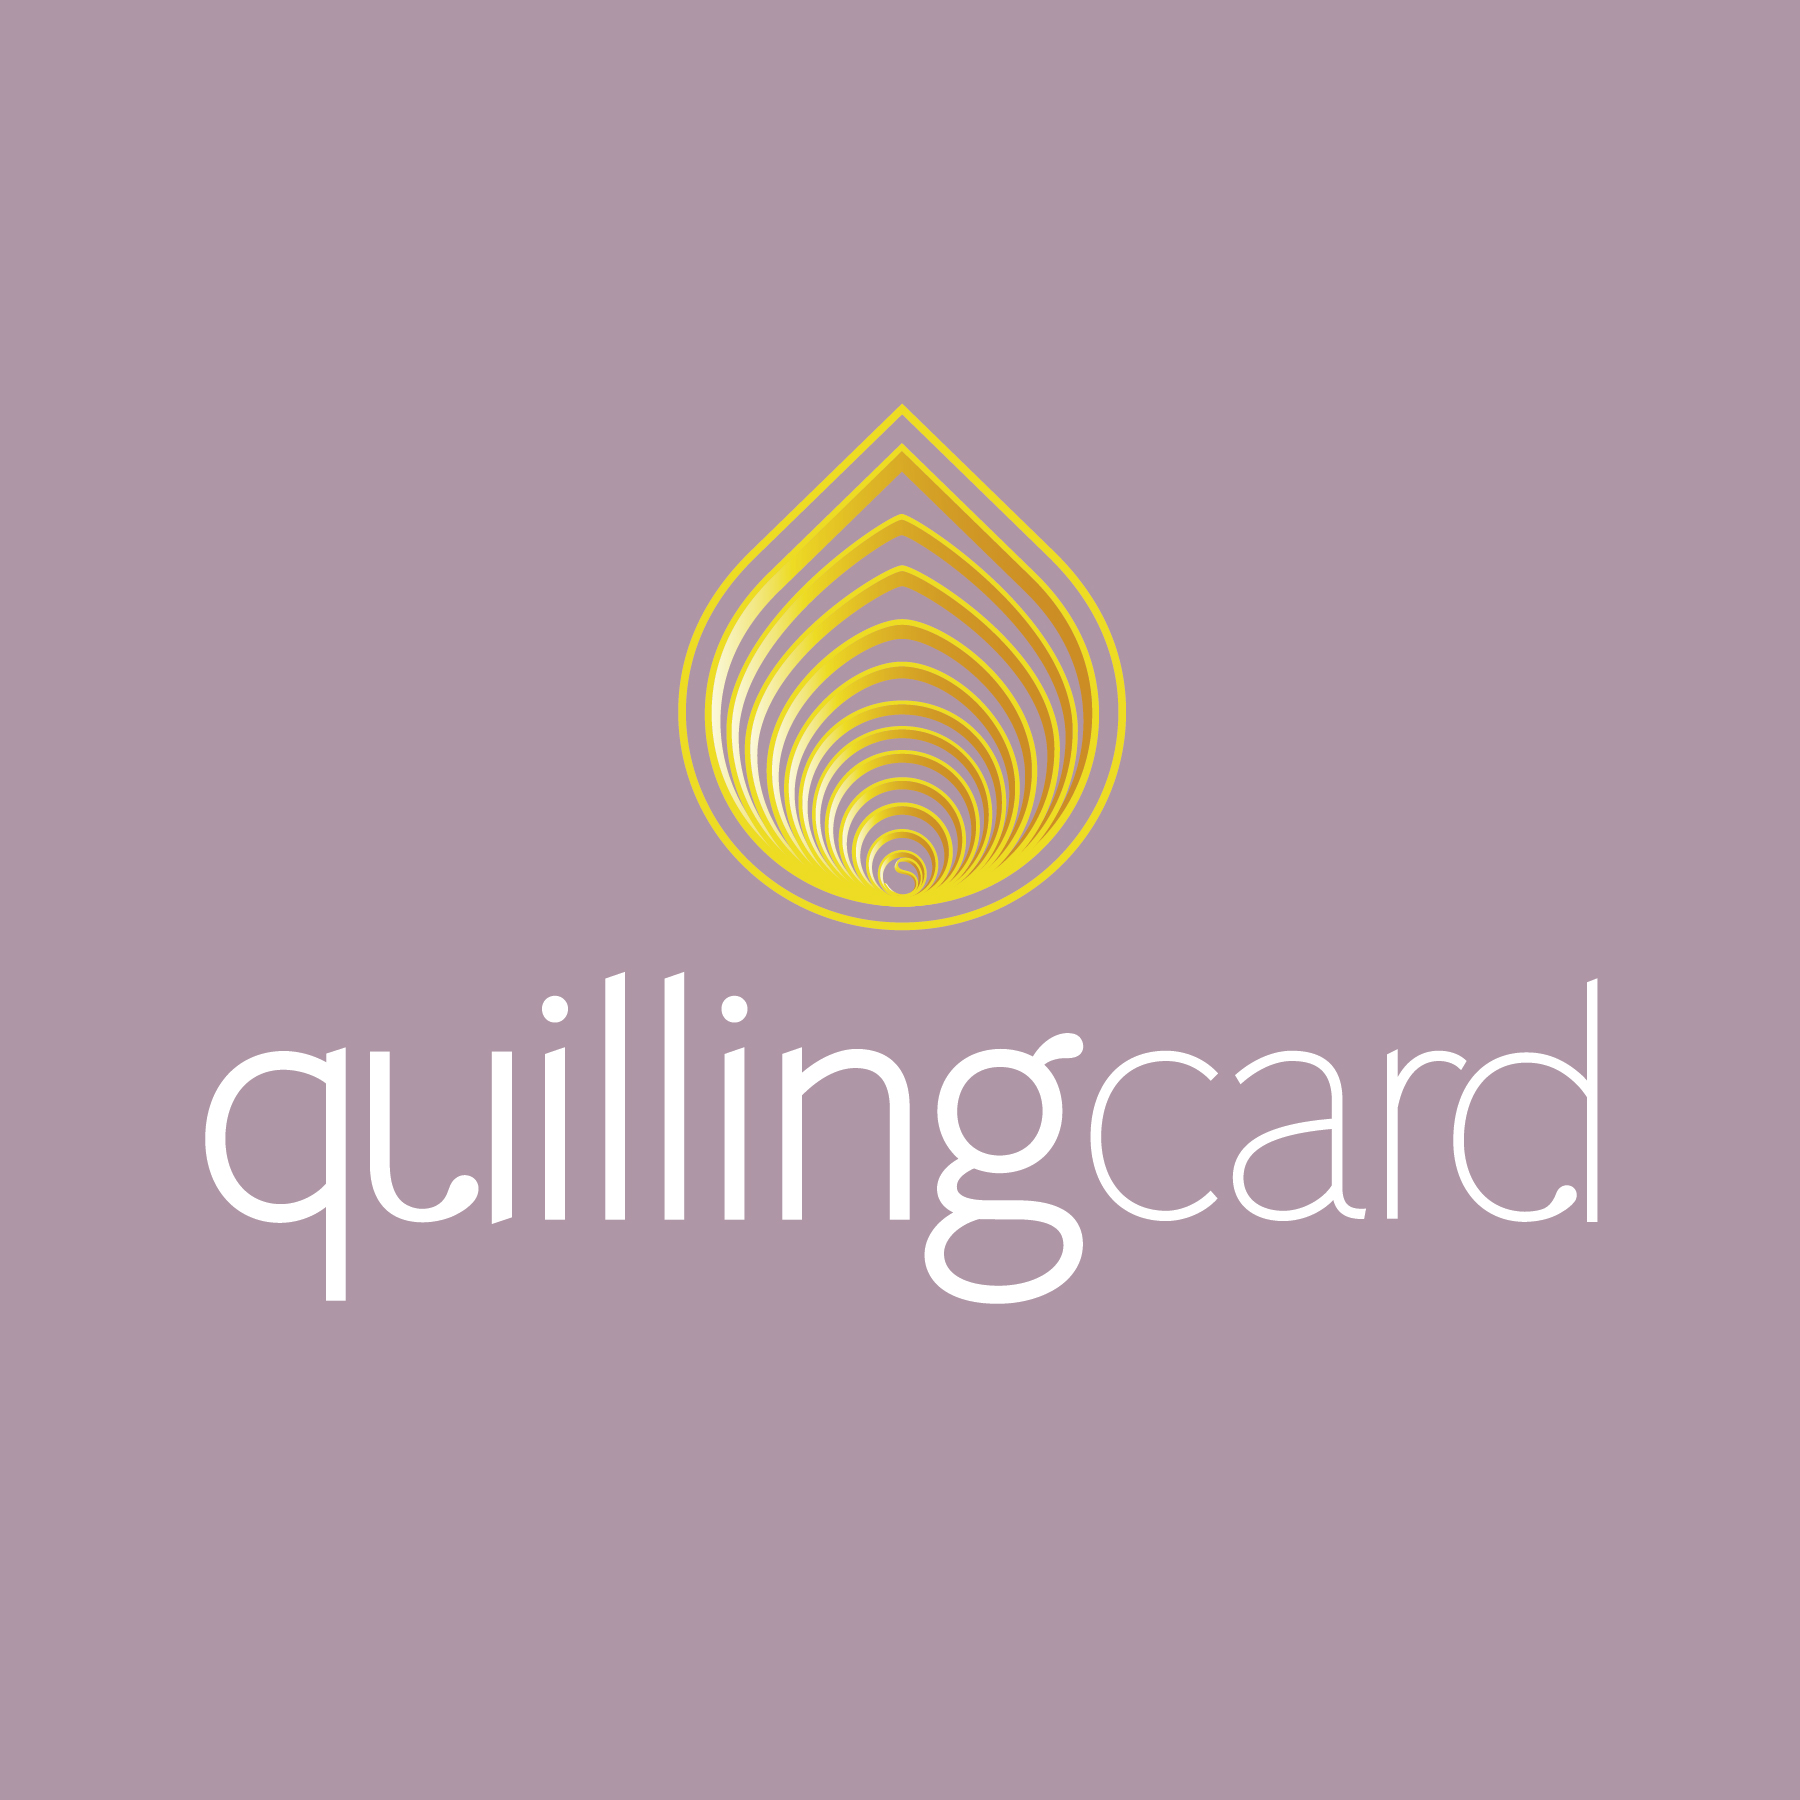 Quilling Card LLC logo